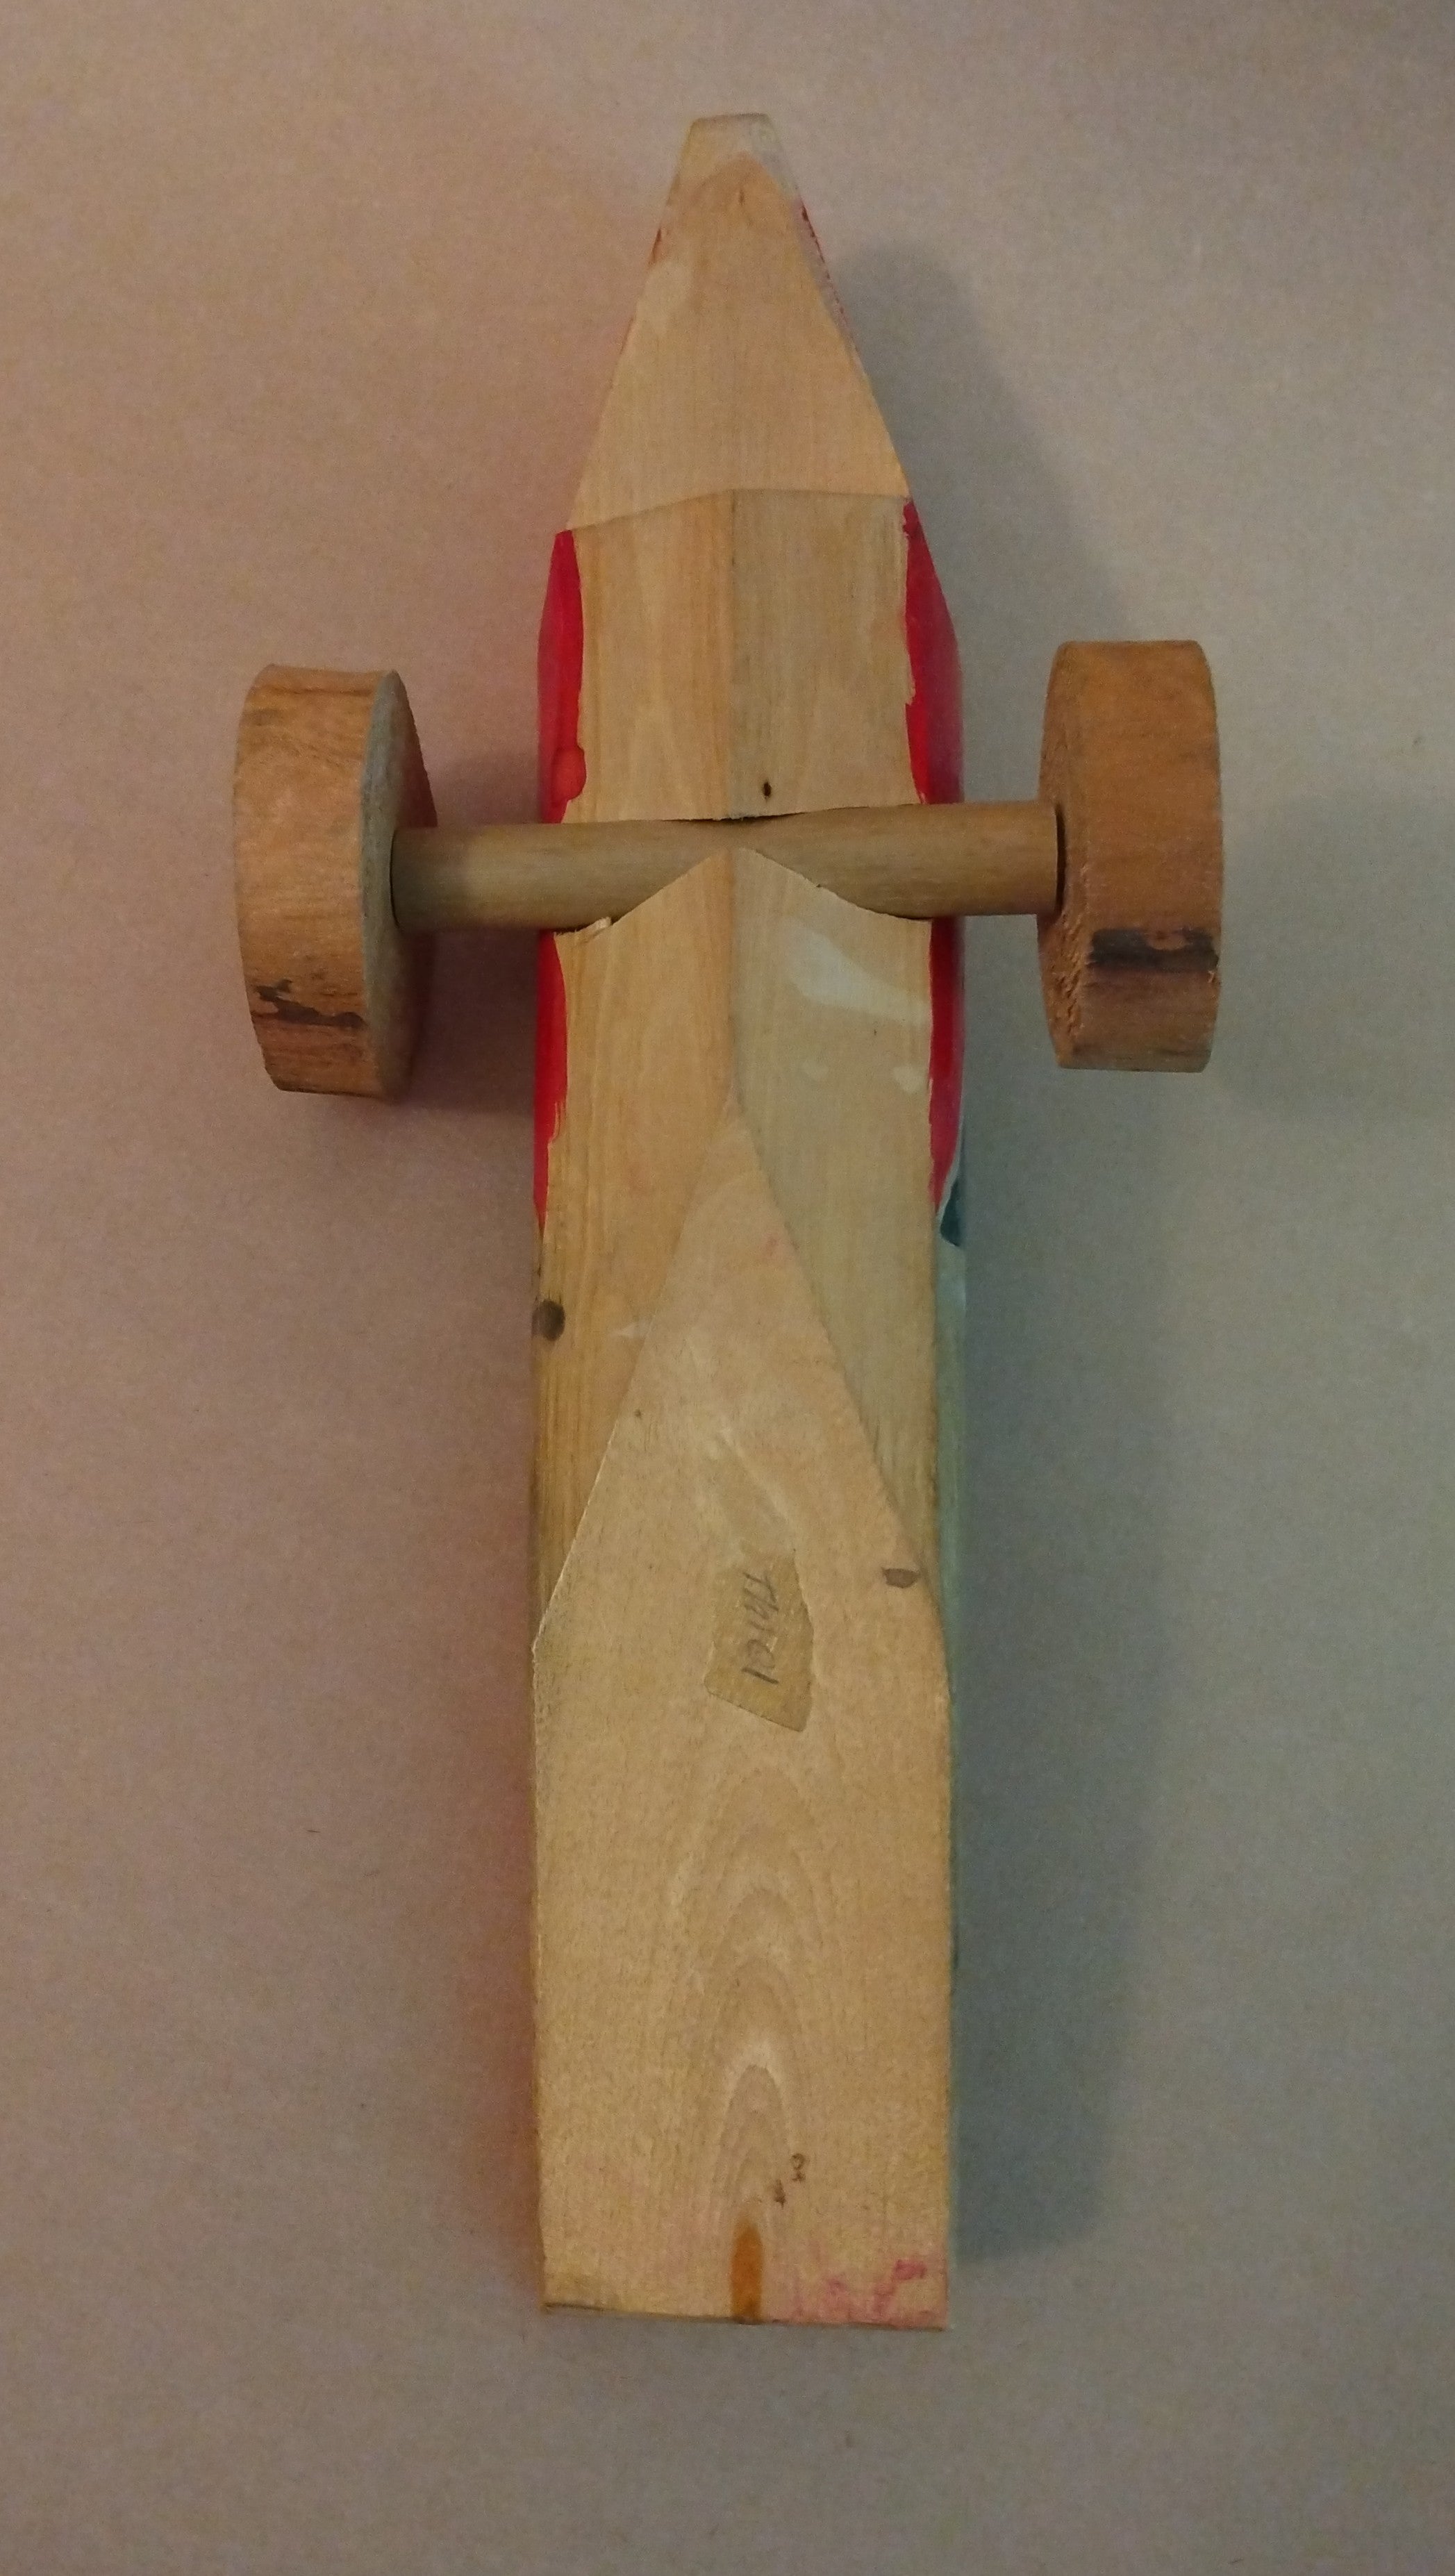 Kijiguruma, Pheasant on Wheels, Japanese wooden Folk Toy; Thiel Collection